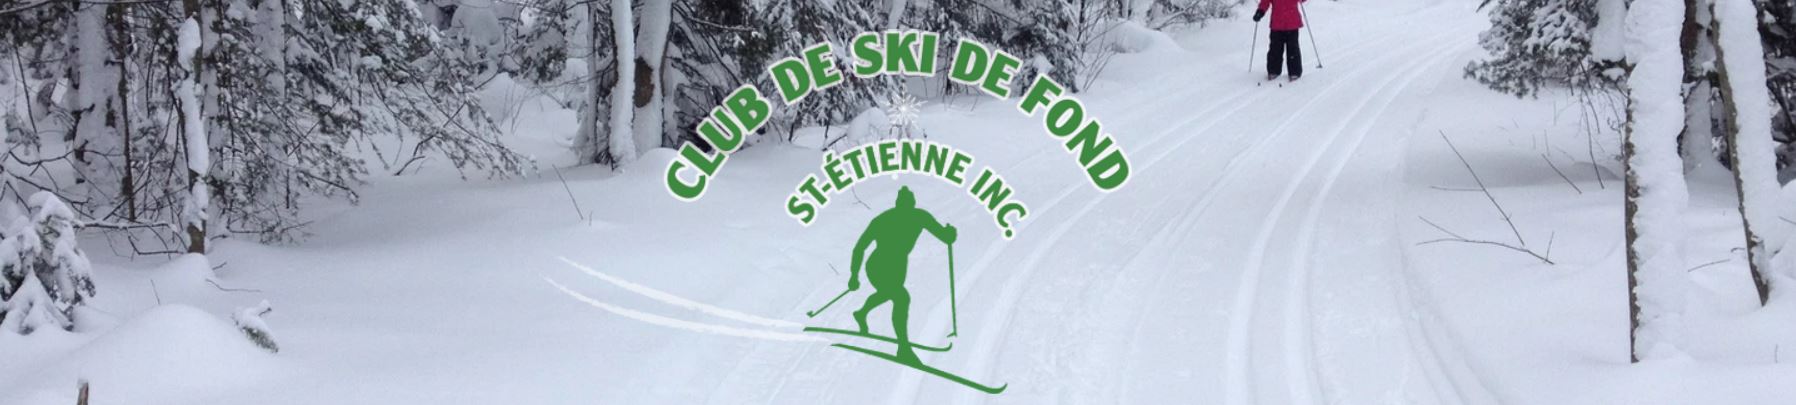 Logo Clu bde Ski de fond de St-Étienne